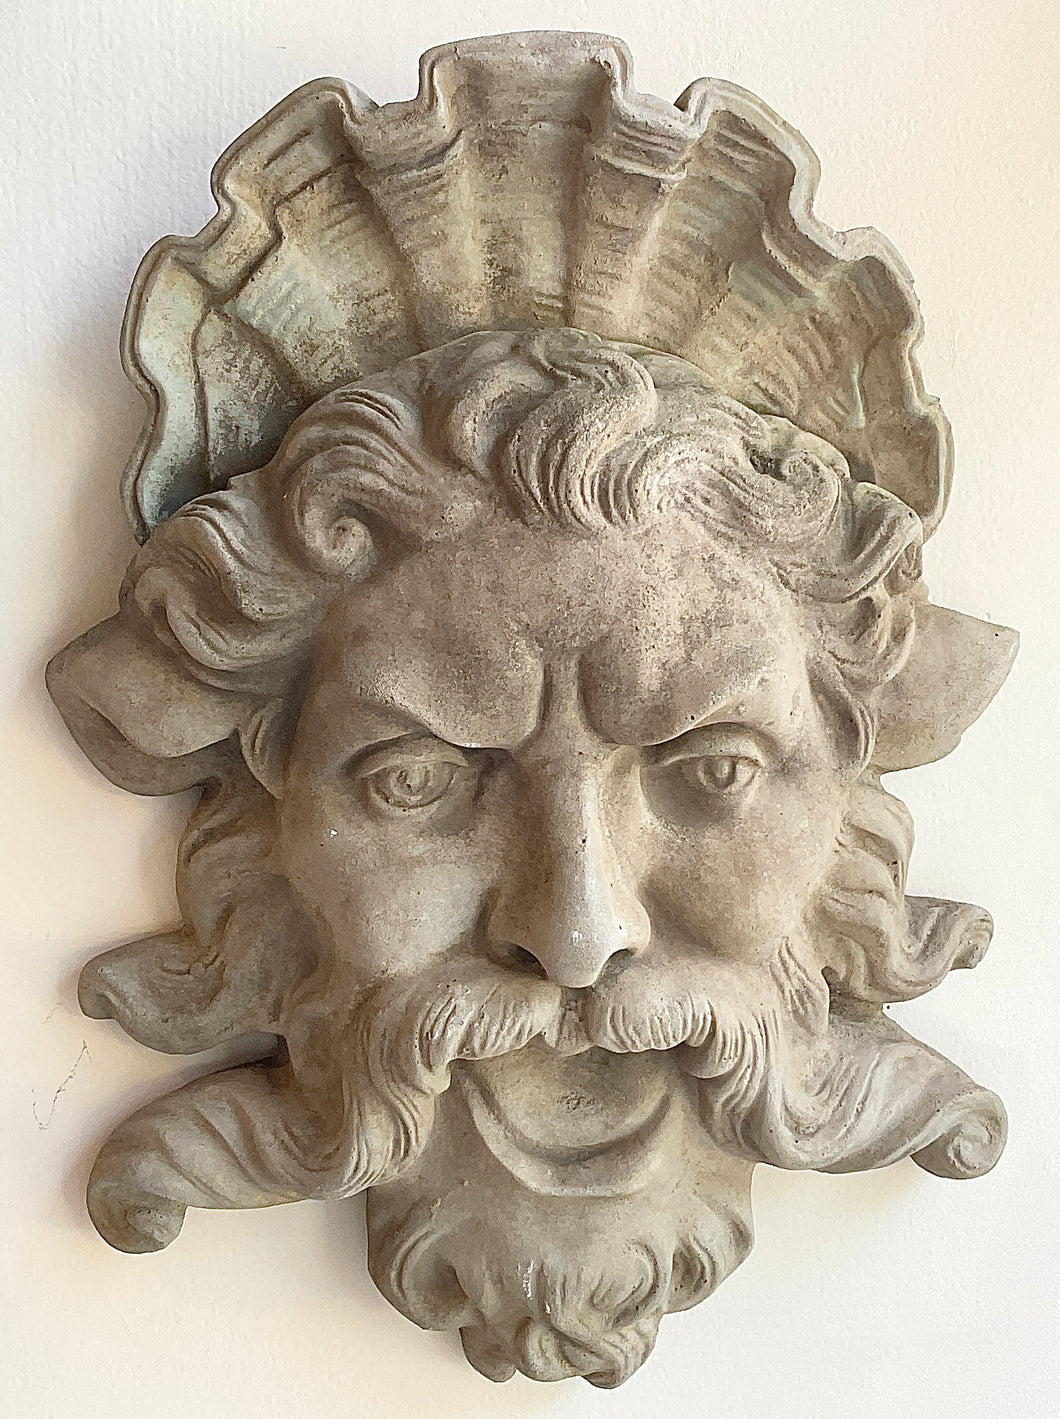 Vintage Figural Fountainhead of Neptune or Poseidon.